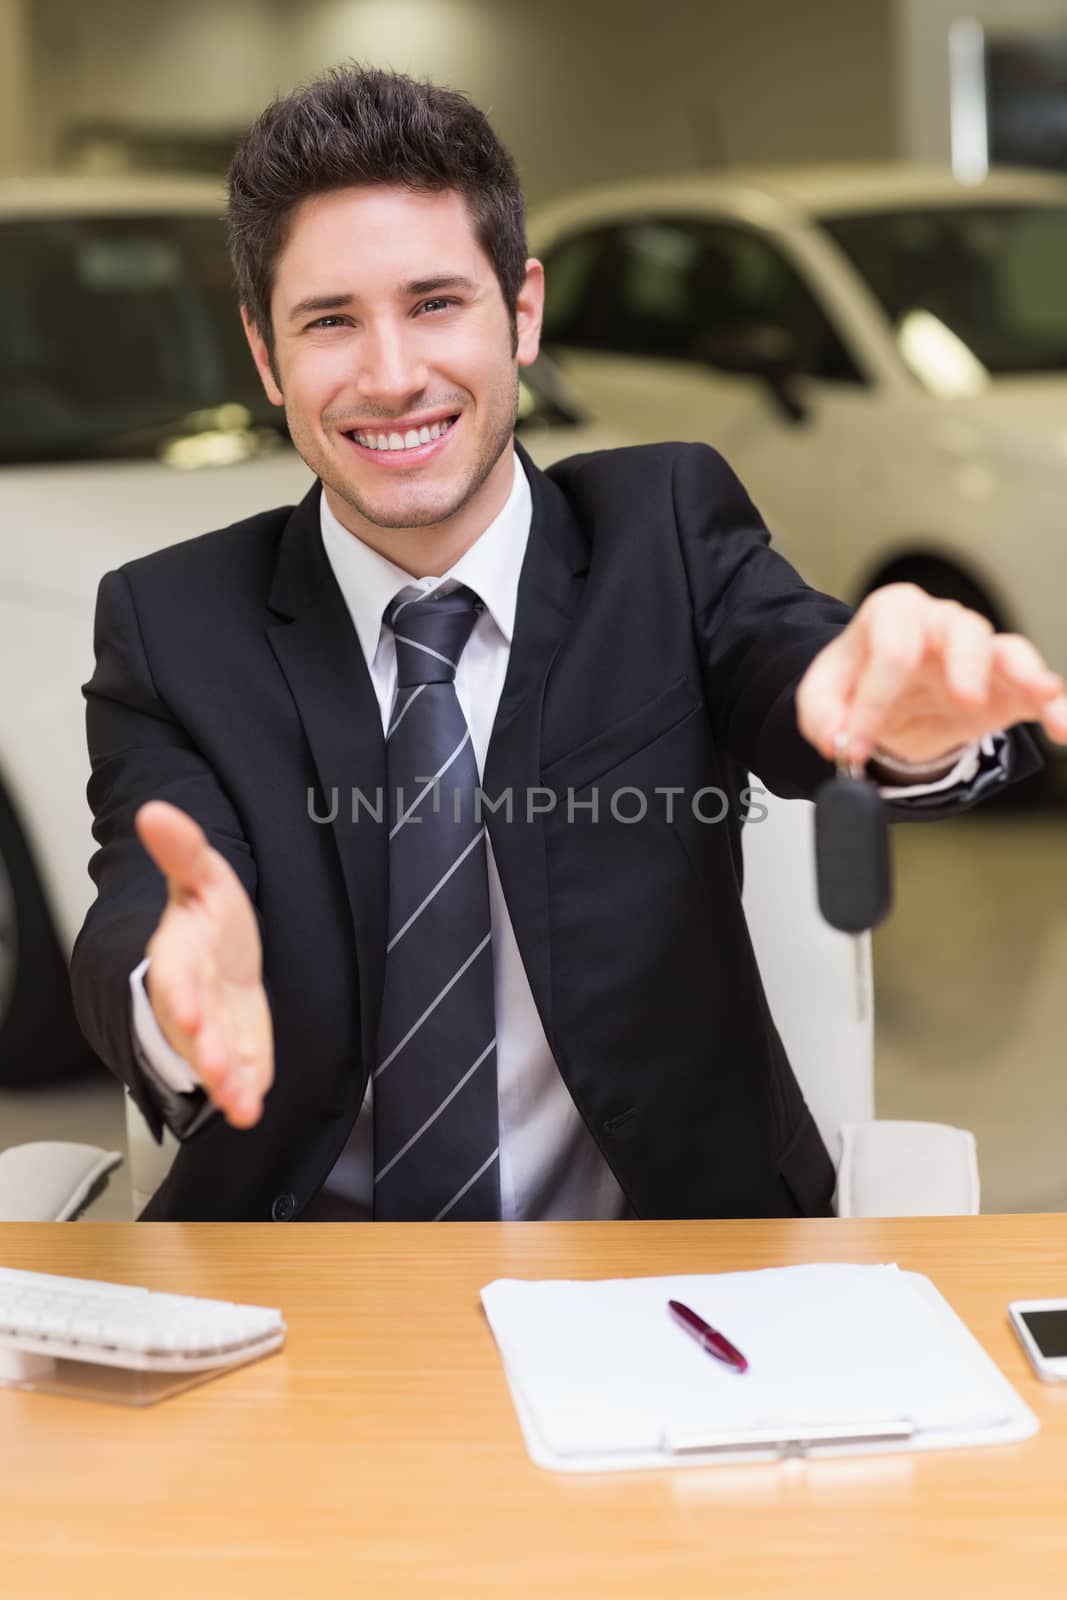 Man giving a customer keys while reaching for handshake by Wavebreakmedia